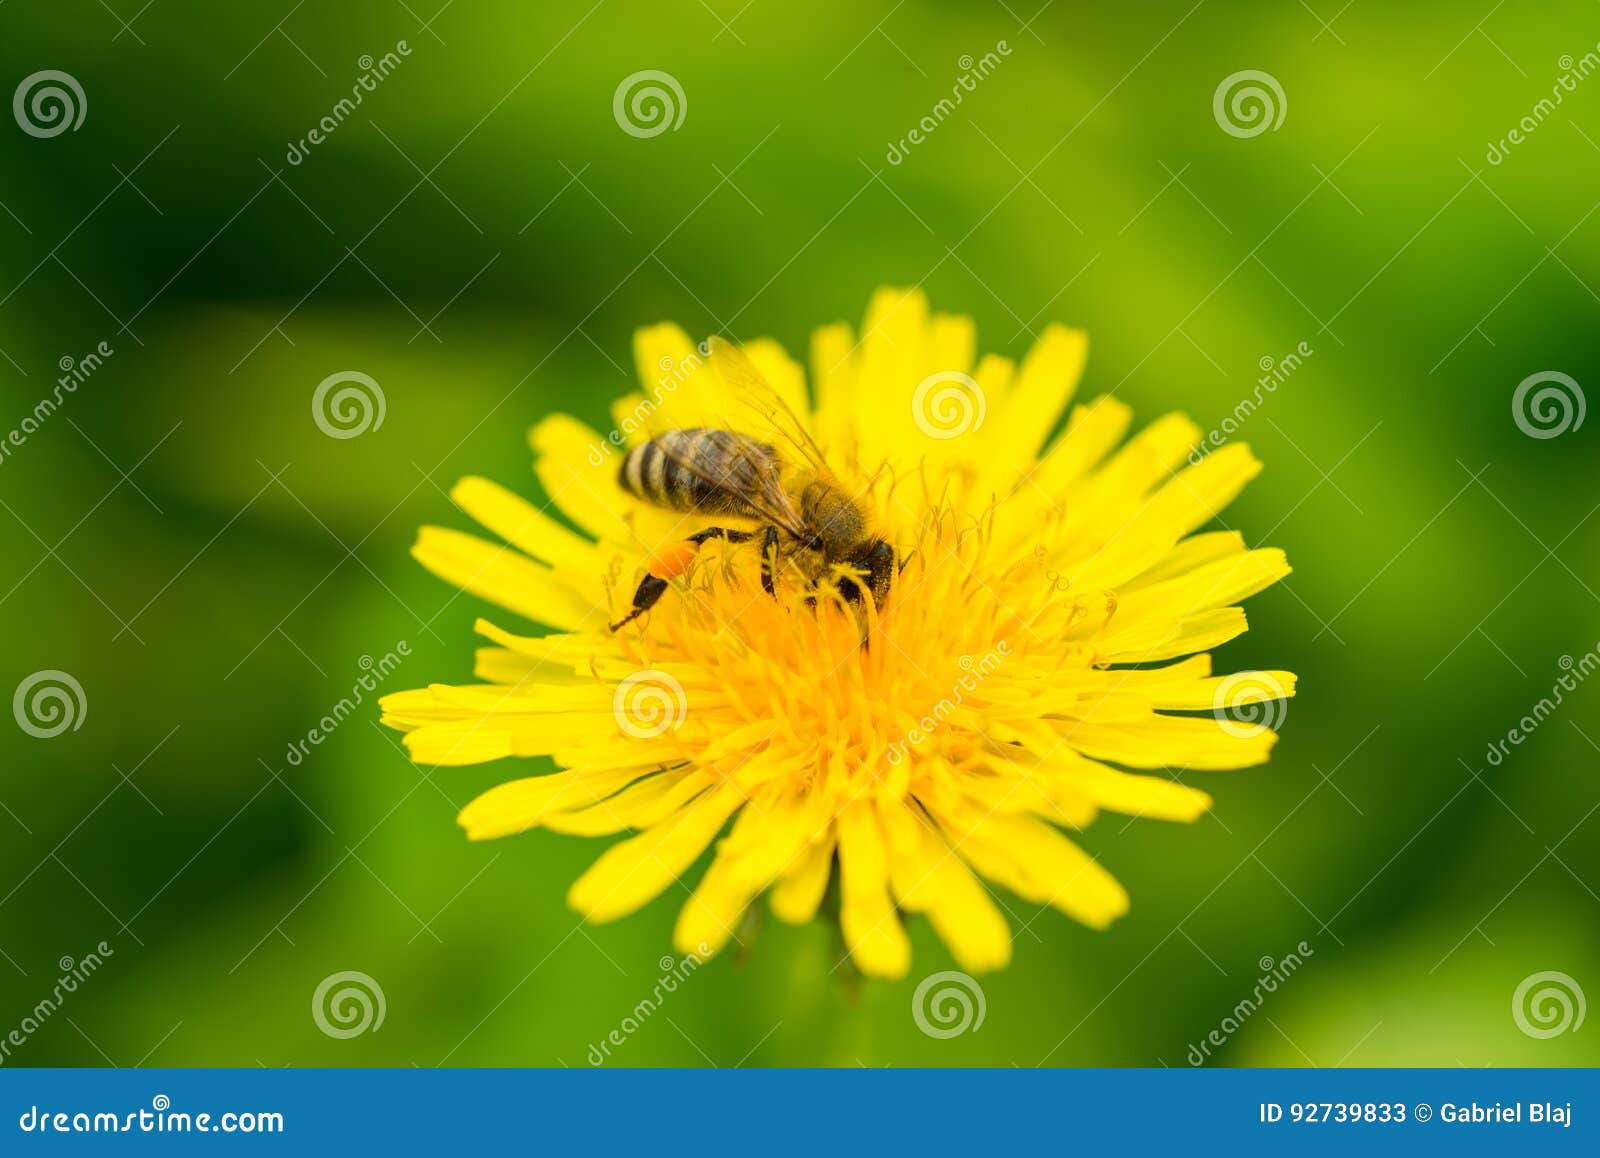 bee pollinate dandelion